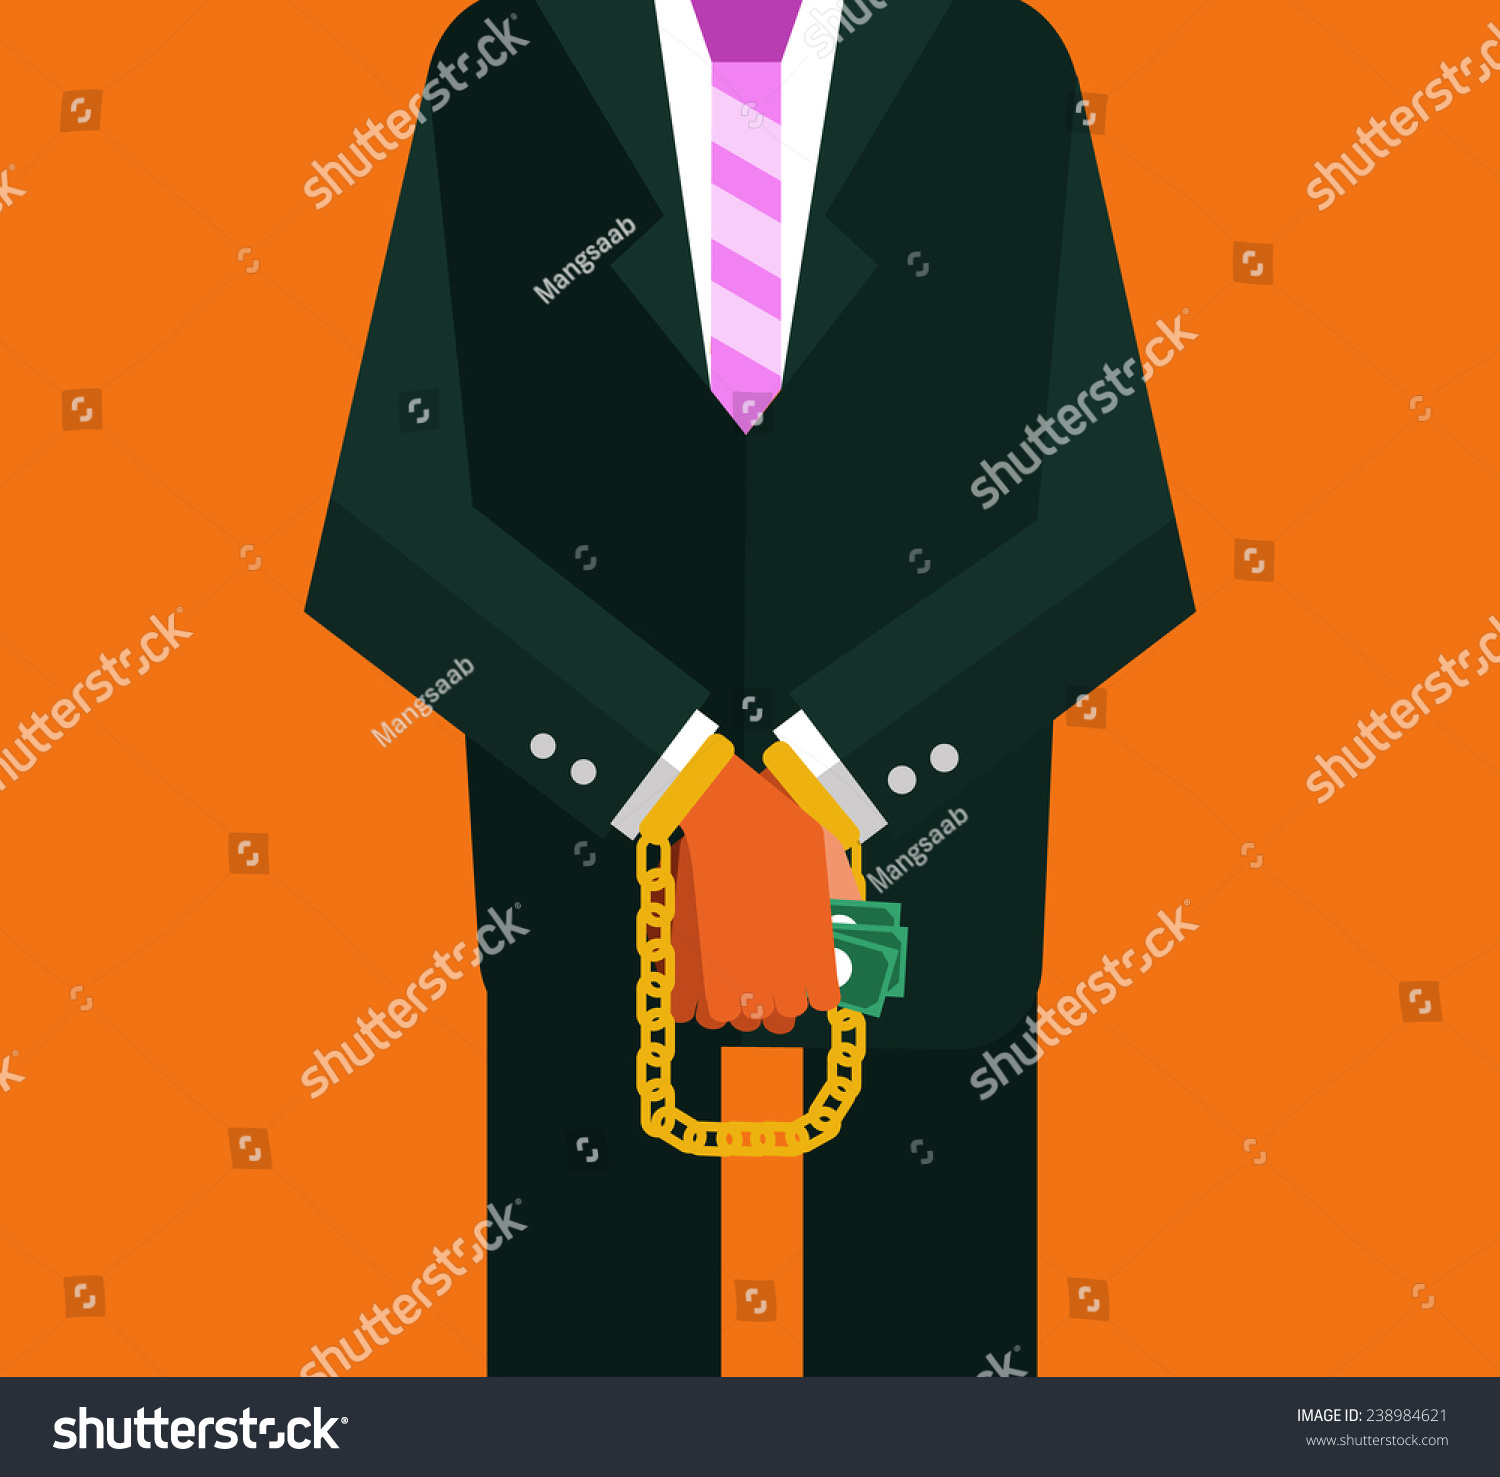 Corruption Man Flat Design Vector Illustration Stock Vector 238984621 ...